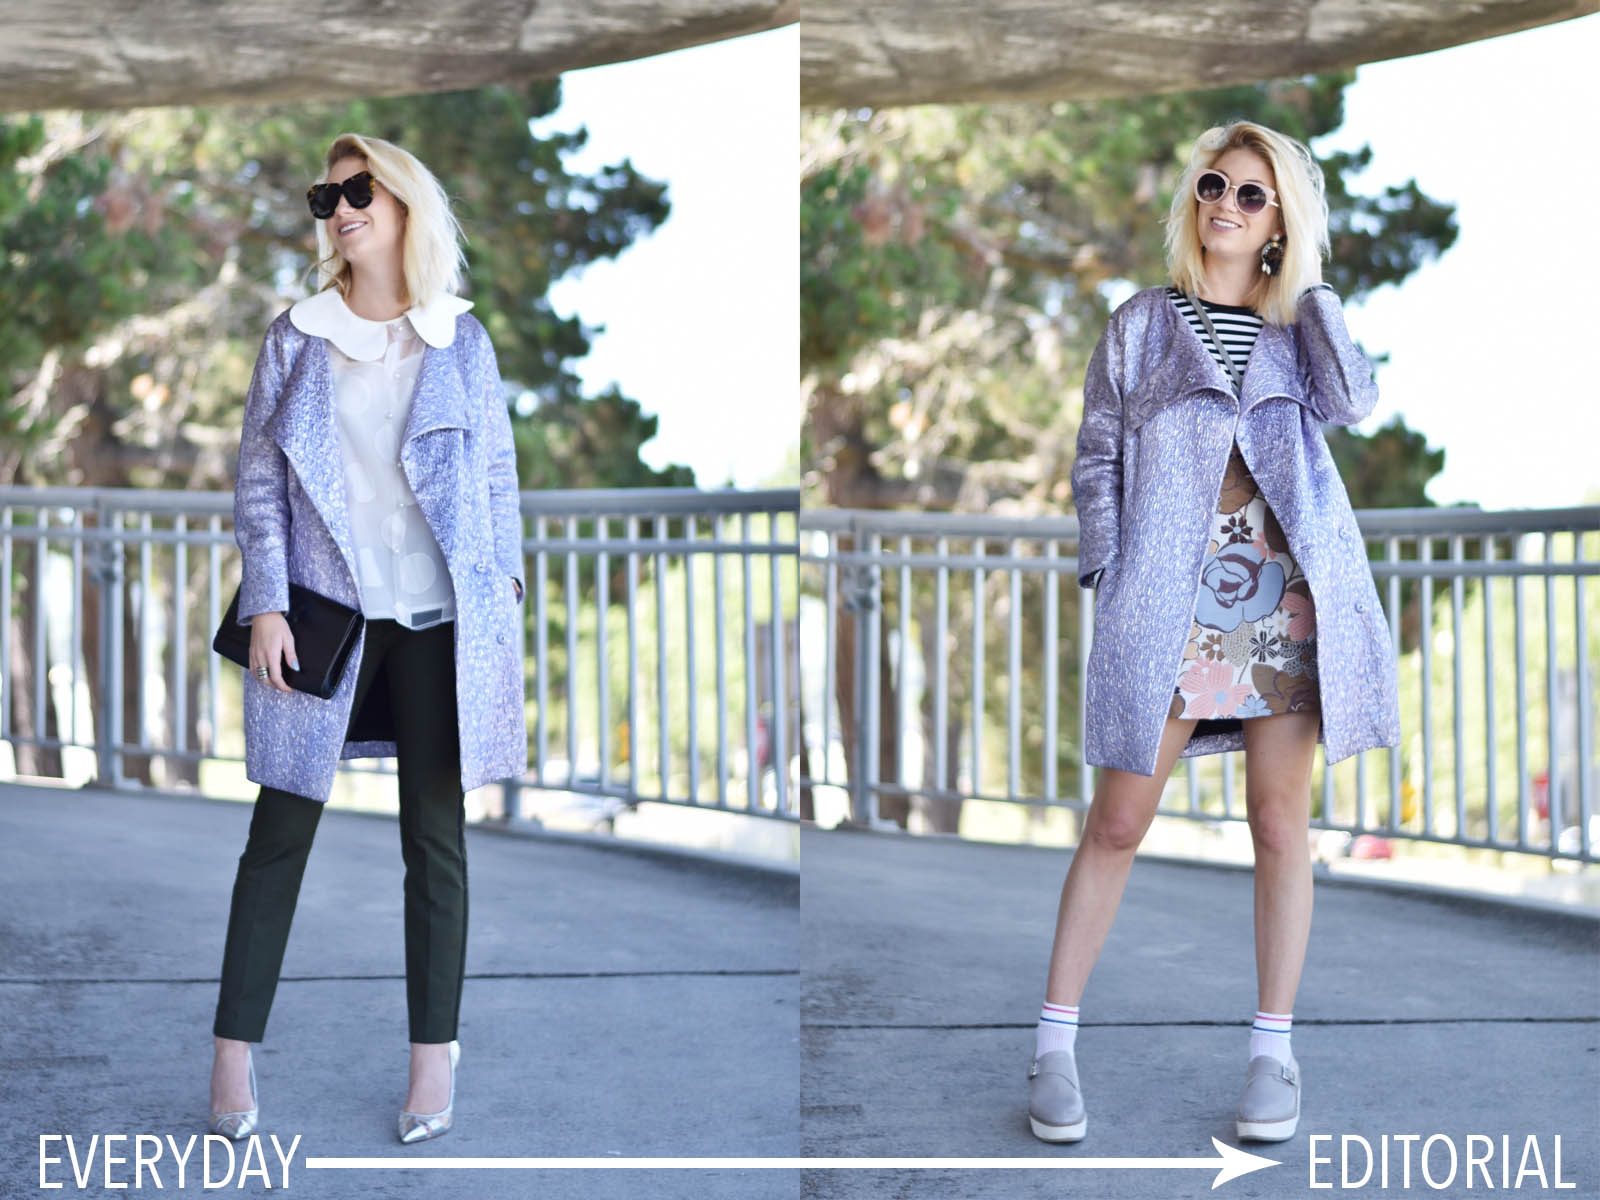 Everyday to Editorial Lavendar Metallic Balenciaga Jacket, how to style a lavender jacket, creative outfit ideas